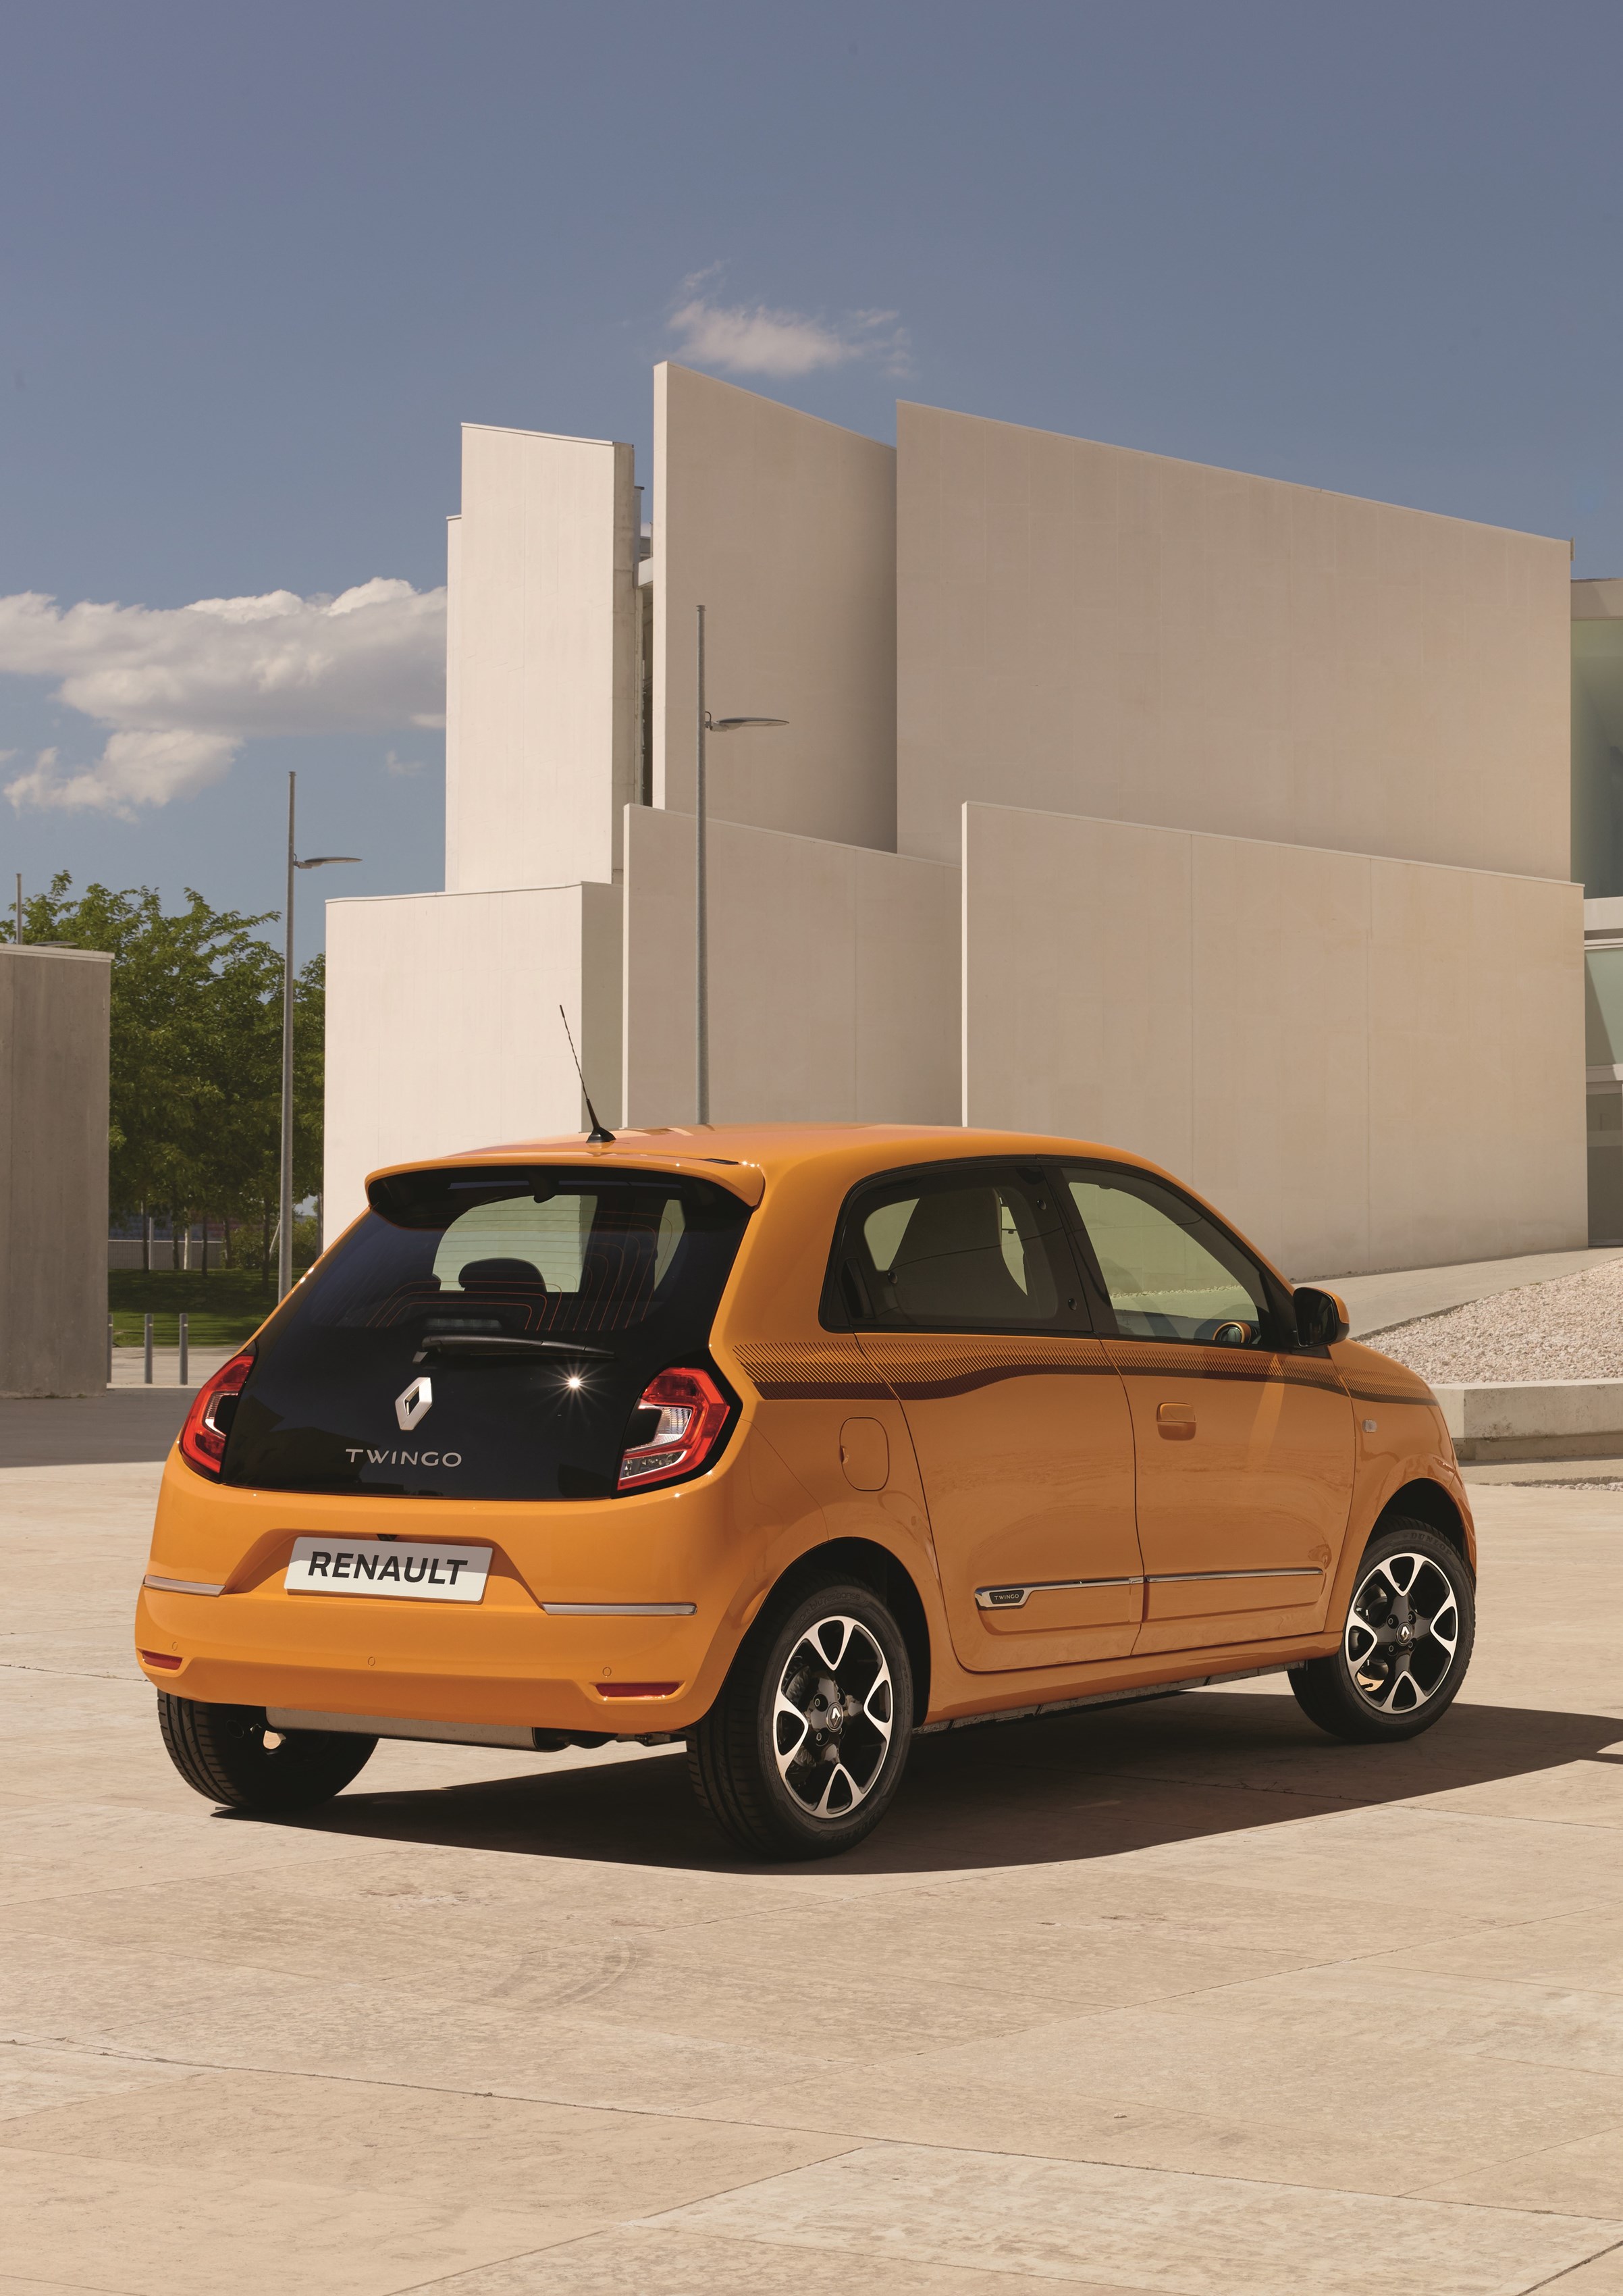 Renault Twingo exterior model